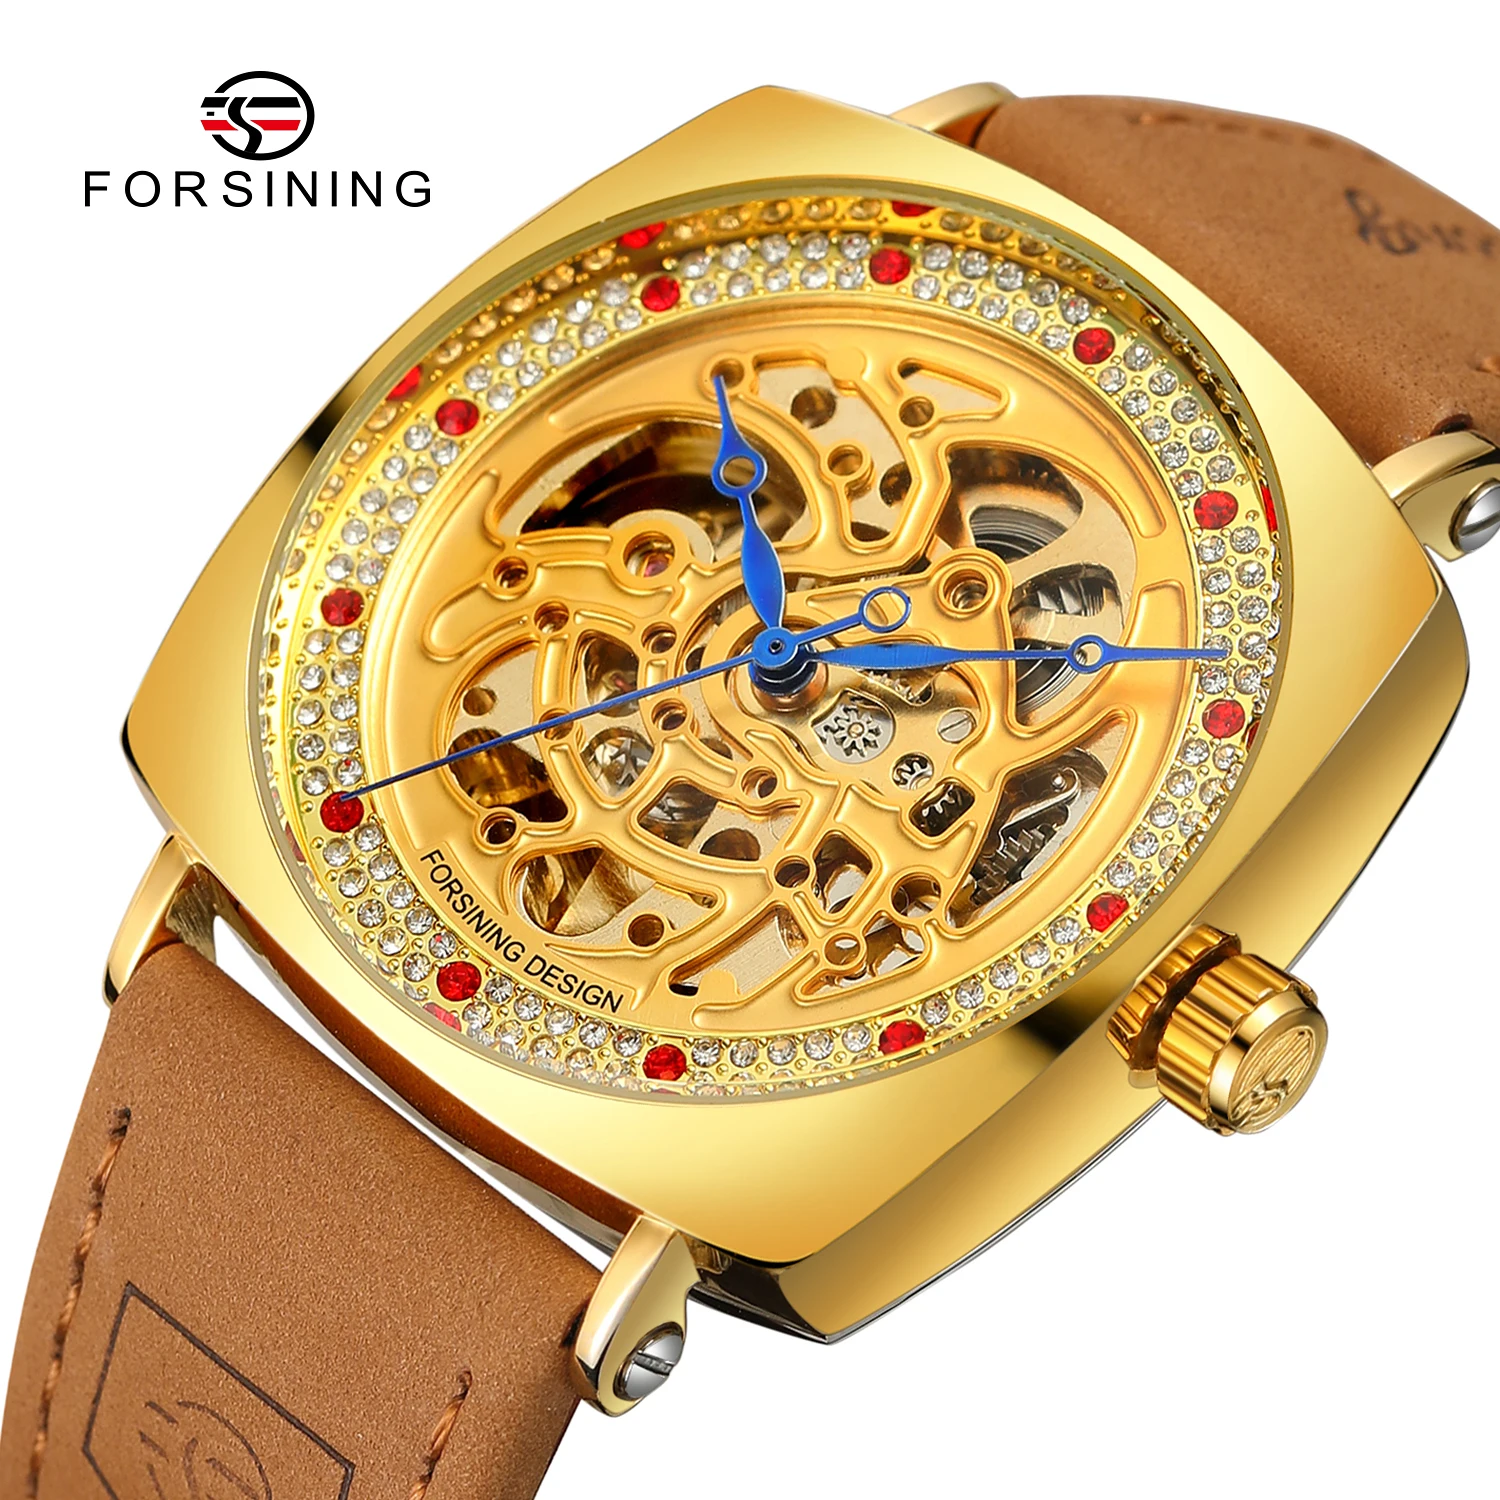 

Forsining Brand Newest Genuine Leather Strap Wrist Watches Luxury Automatic Self Wind Skeleton Men's Watch